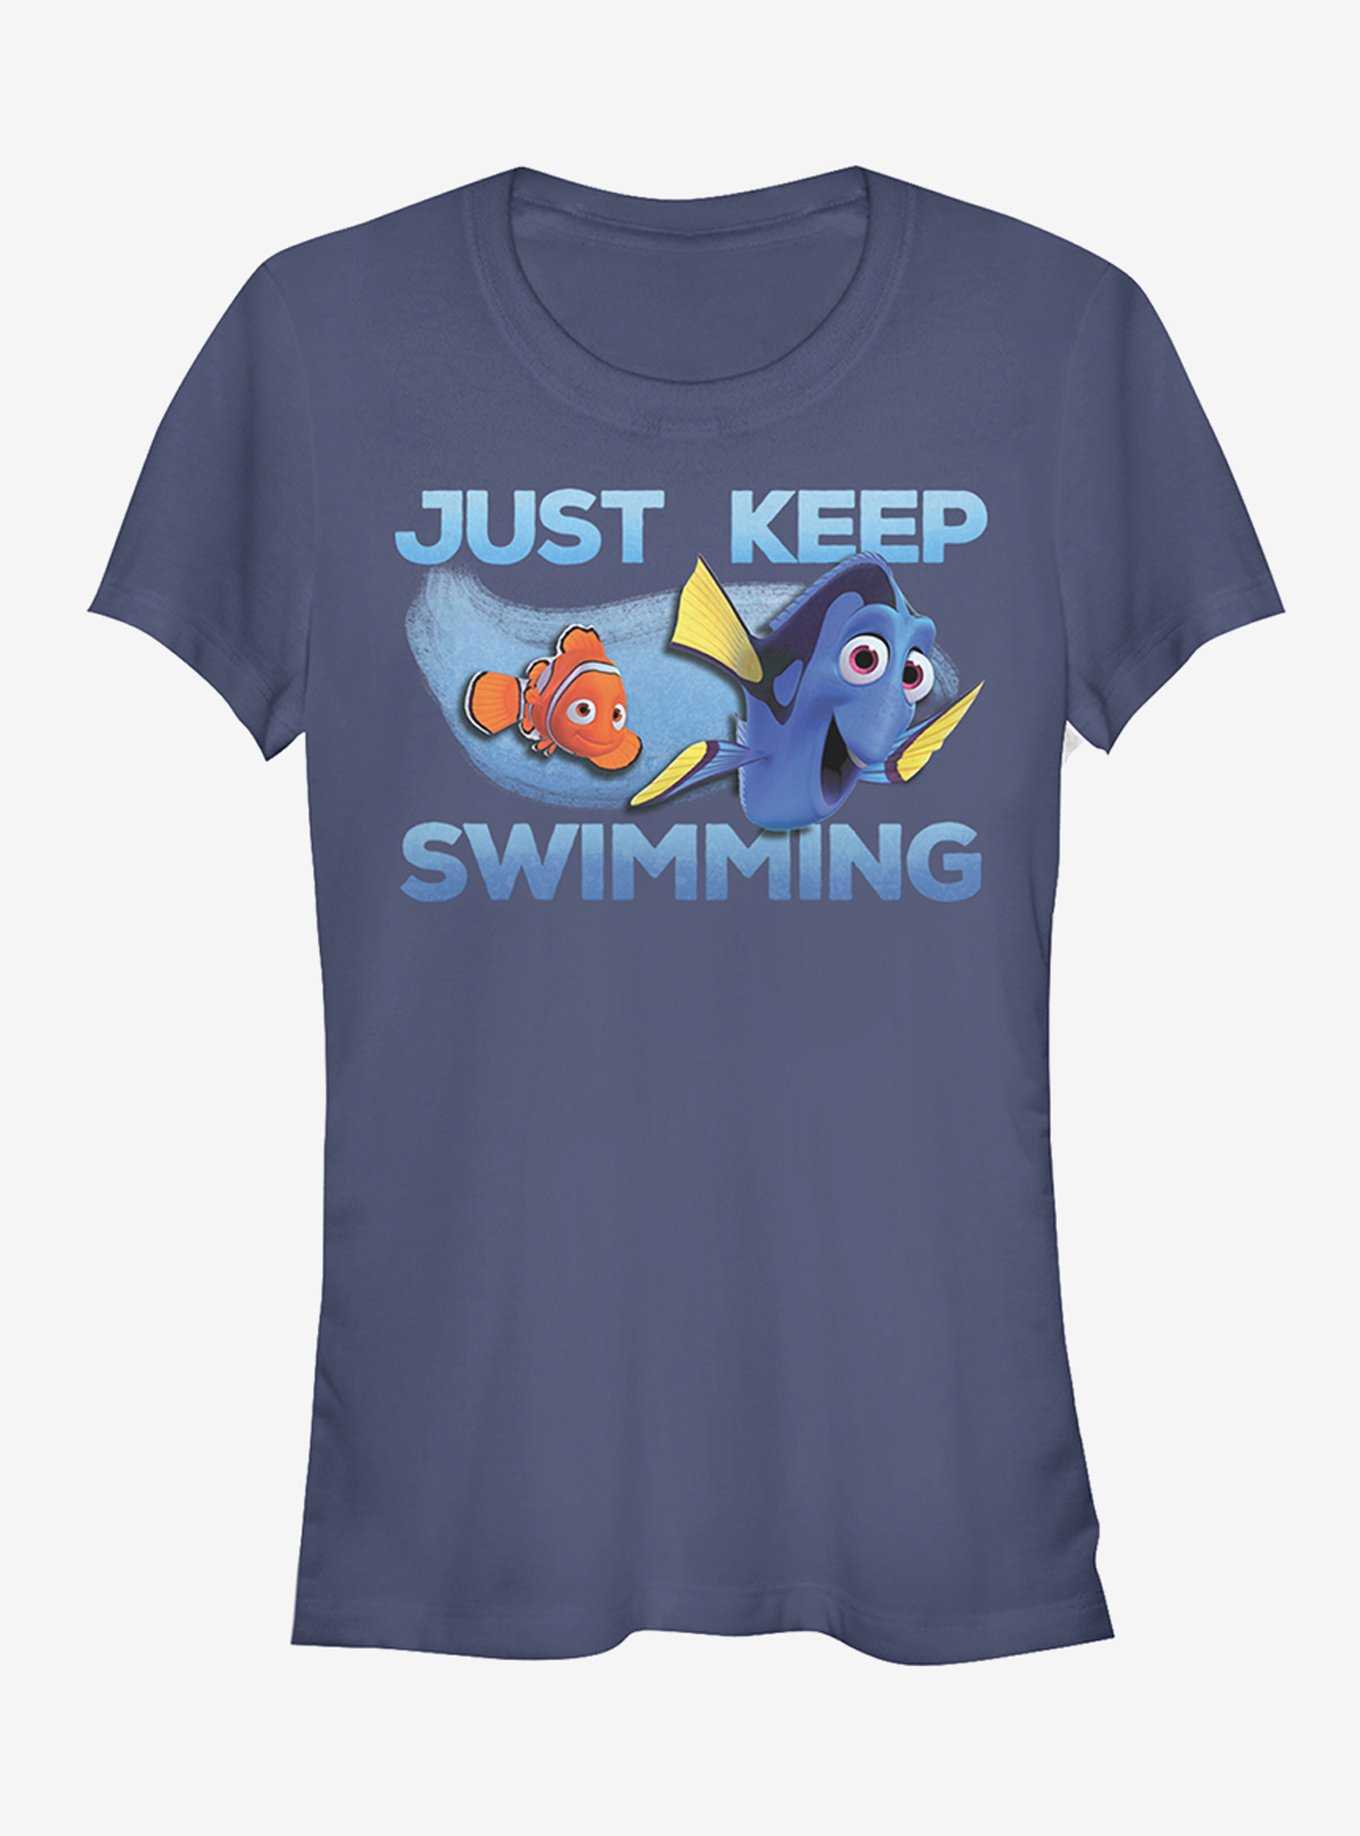 Disney Pixar Finding Dory Just Keep Swimming Current Girls T-Shirt, , hi-res